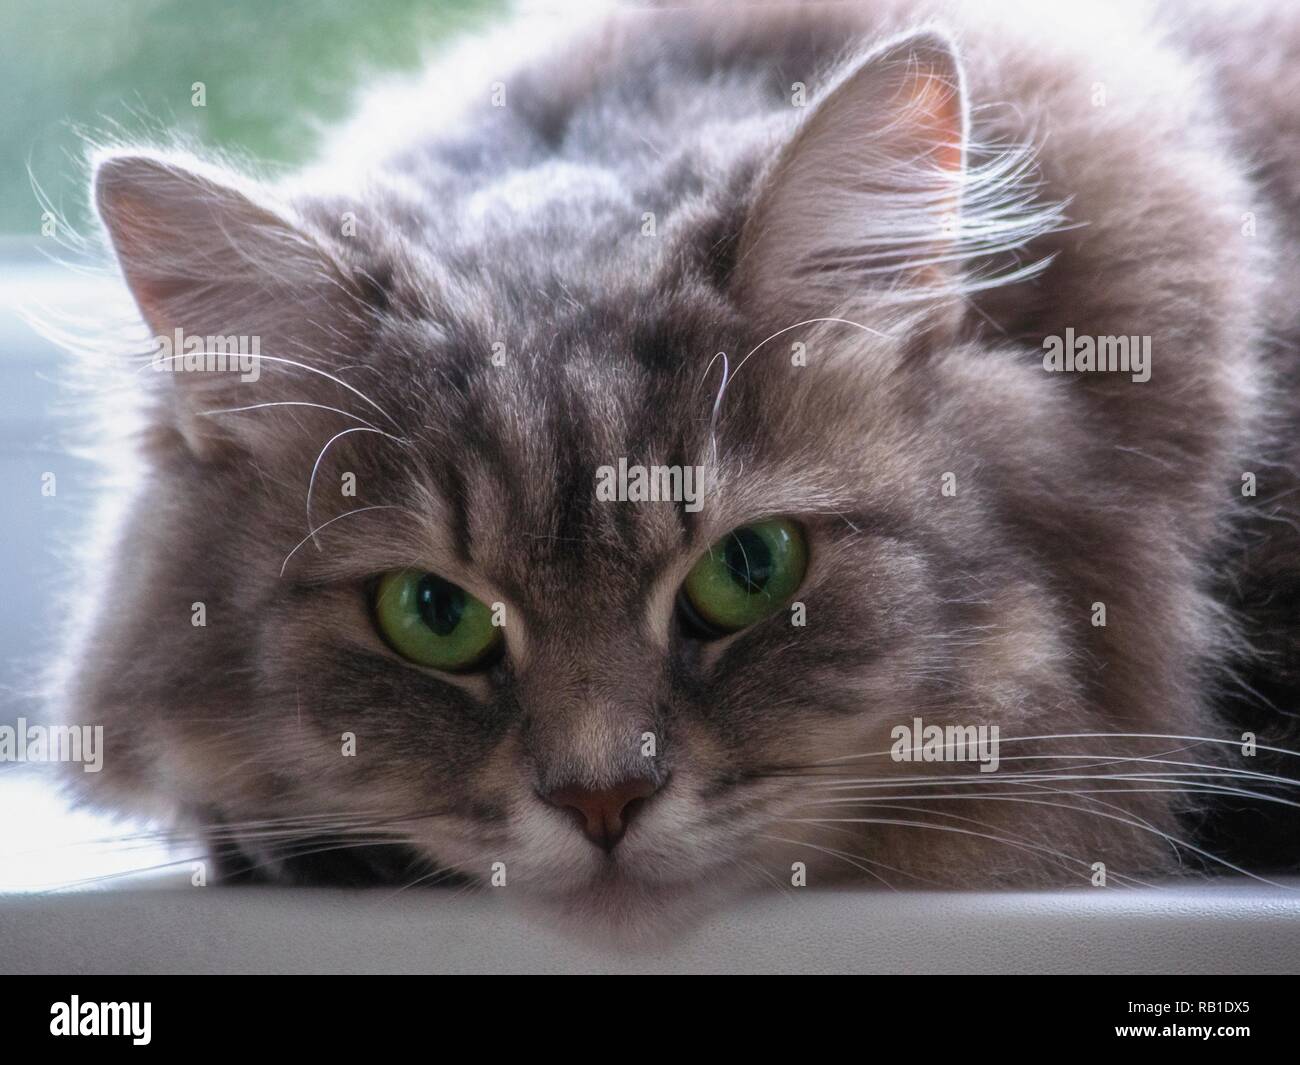 Portrait of beautiful cat face closeup Stock Photo